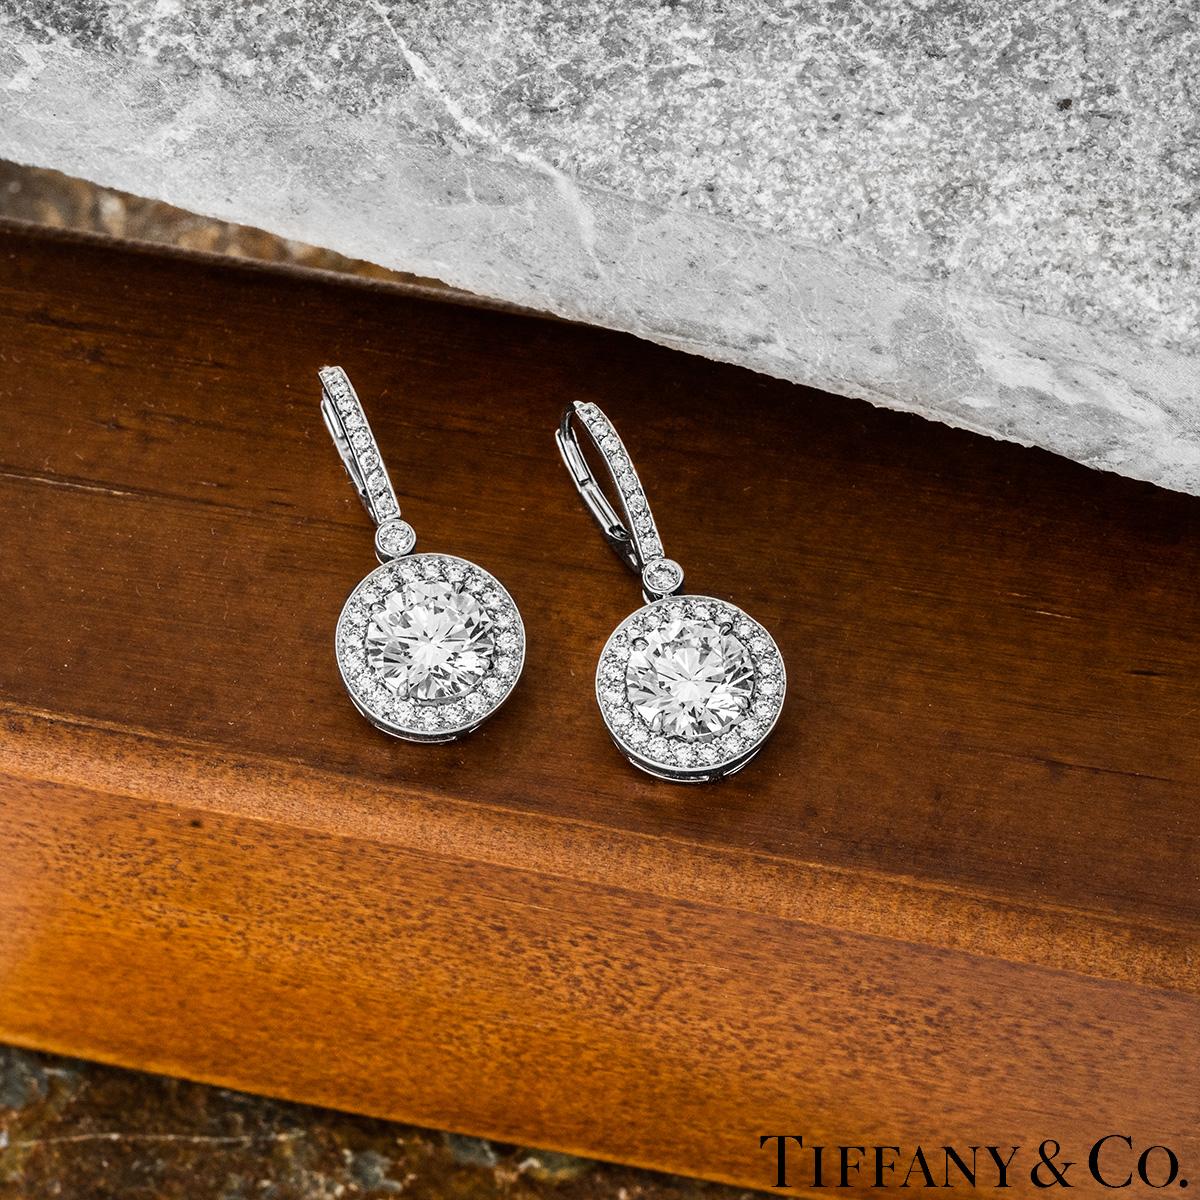 Tiffany & Co. Platinum Diamond Earrings 3.65 Carat TDW For Sale 2